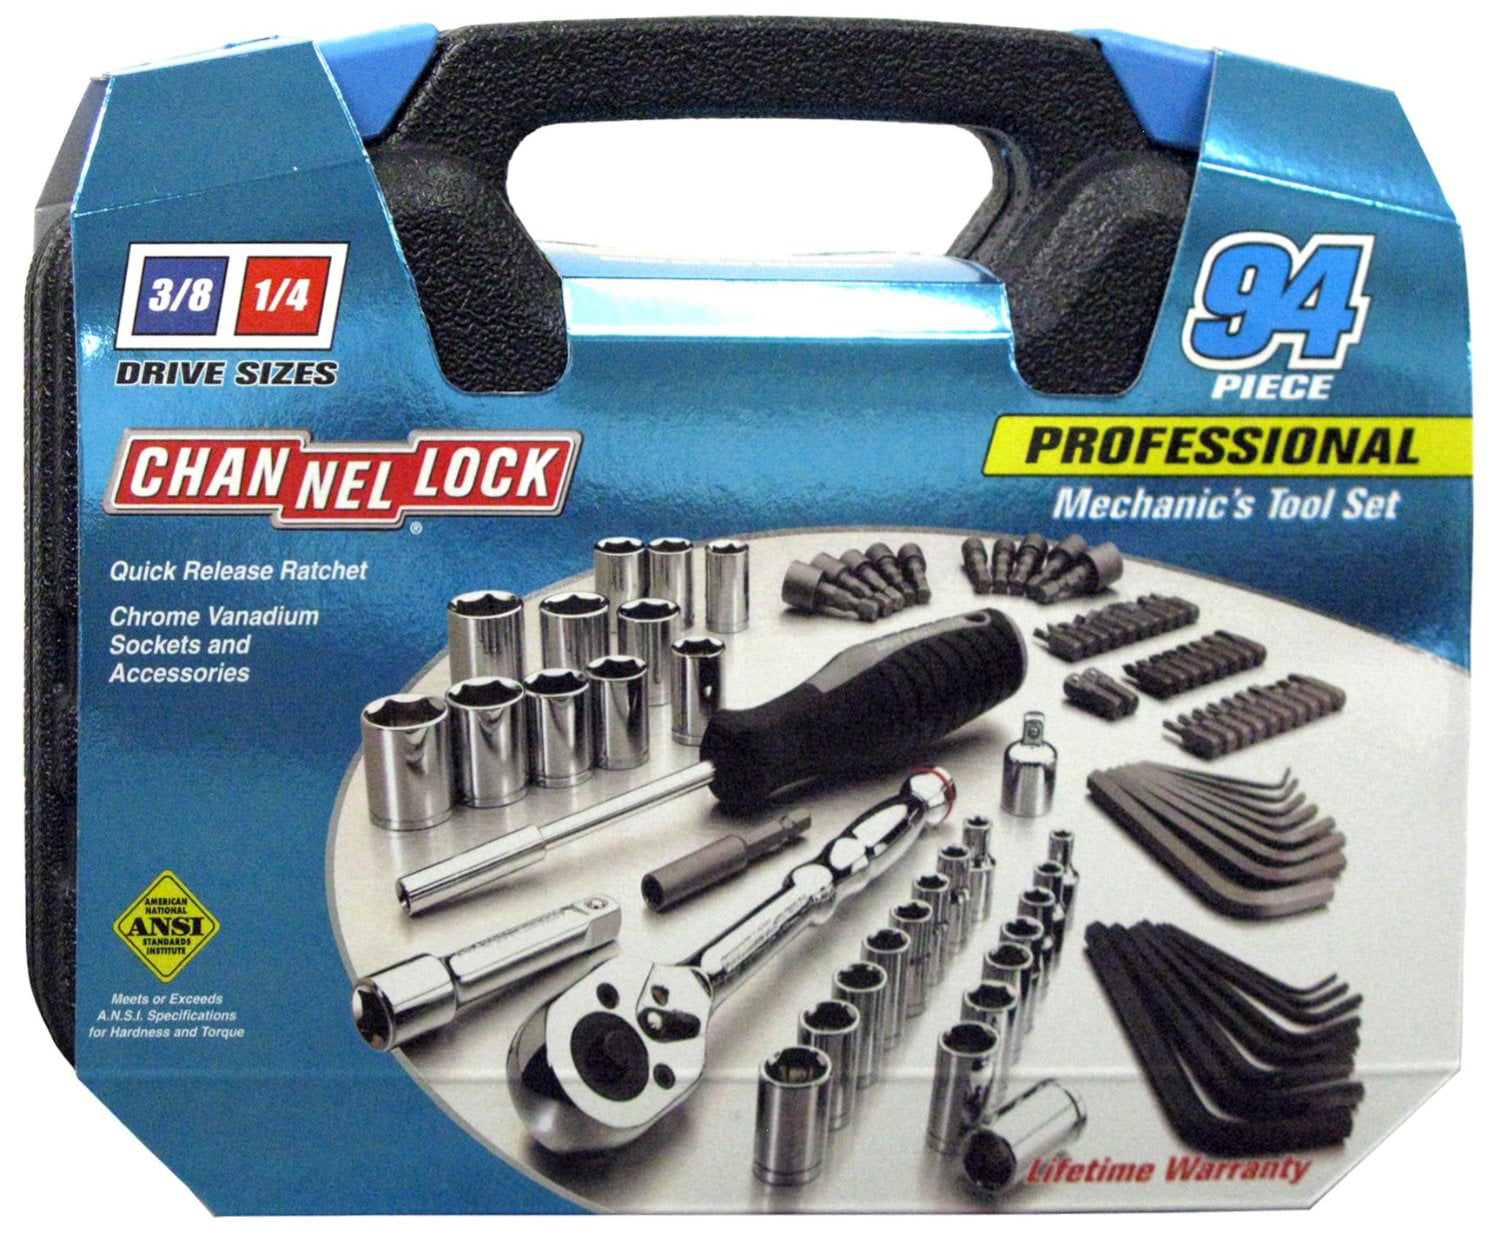 Channellock 39070 Chrome/Nickel Finish Mechanics Tool Set, 94 piece set